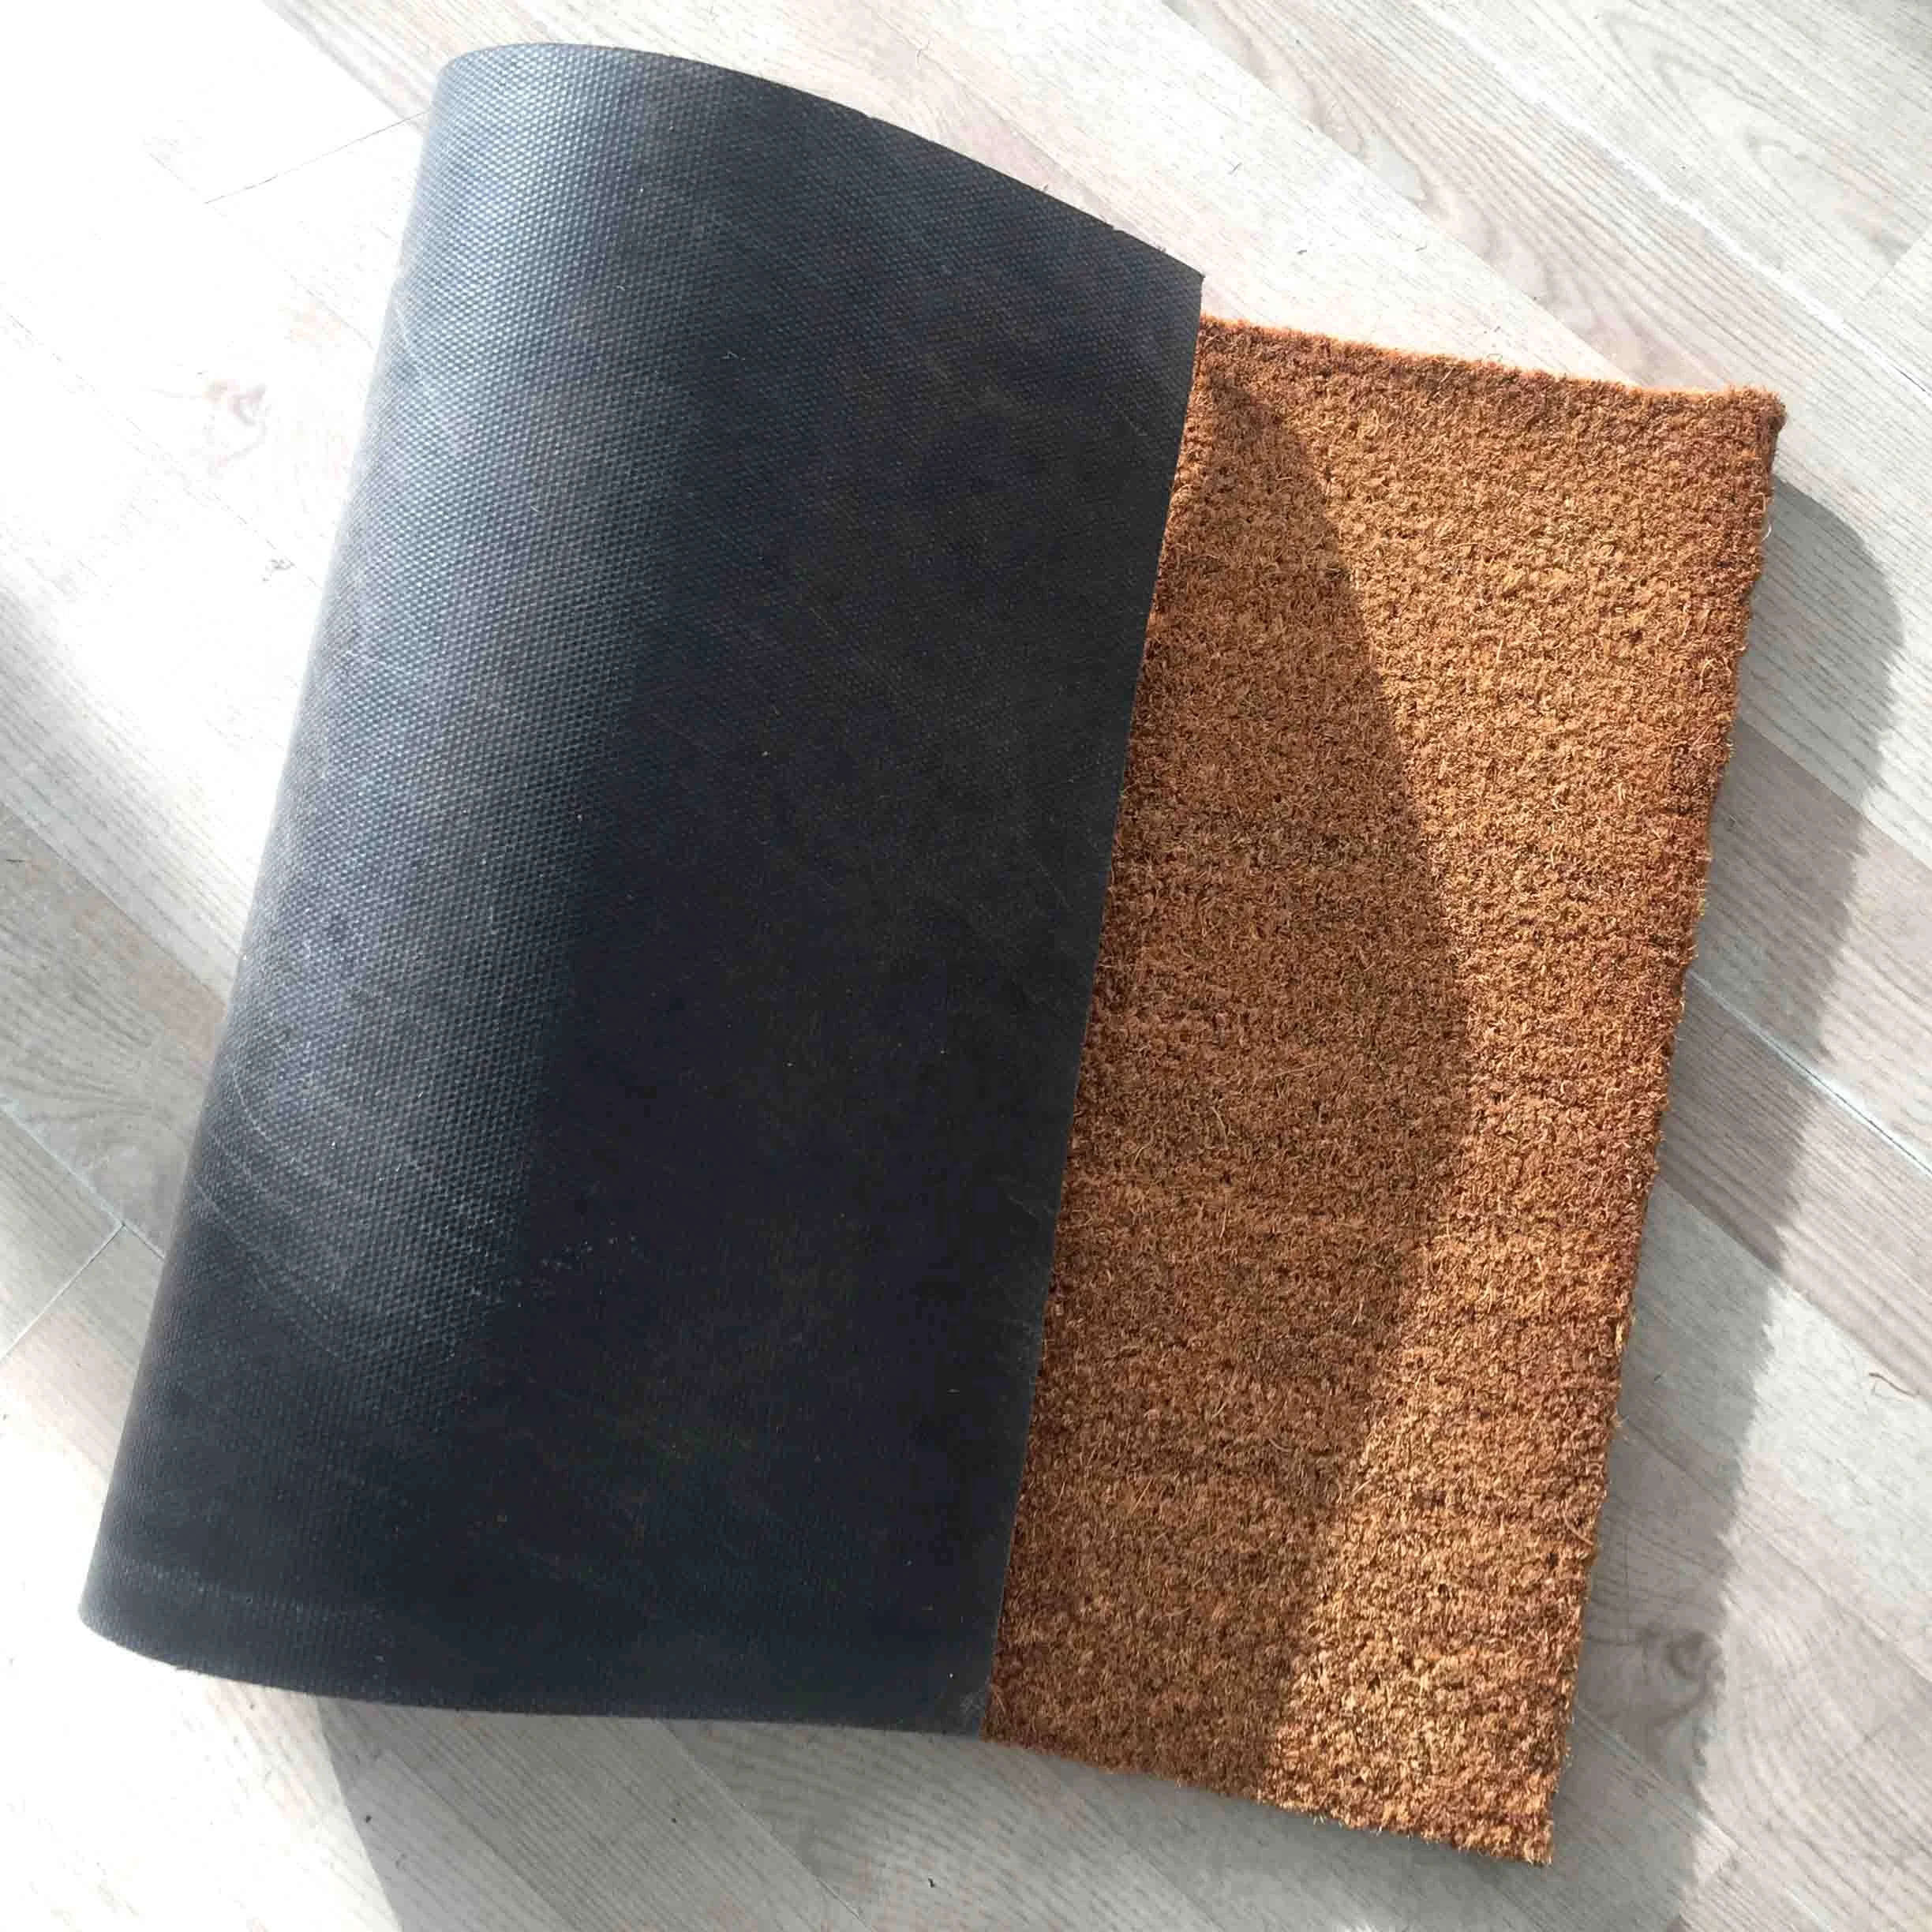 Source Wholesale Eco-Friendly Blank Brown Plain Coir Door Mat on m